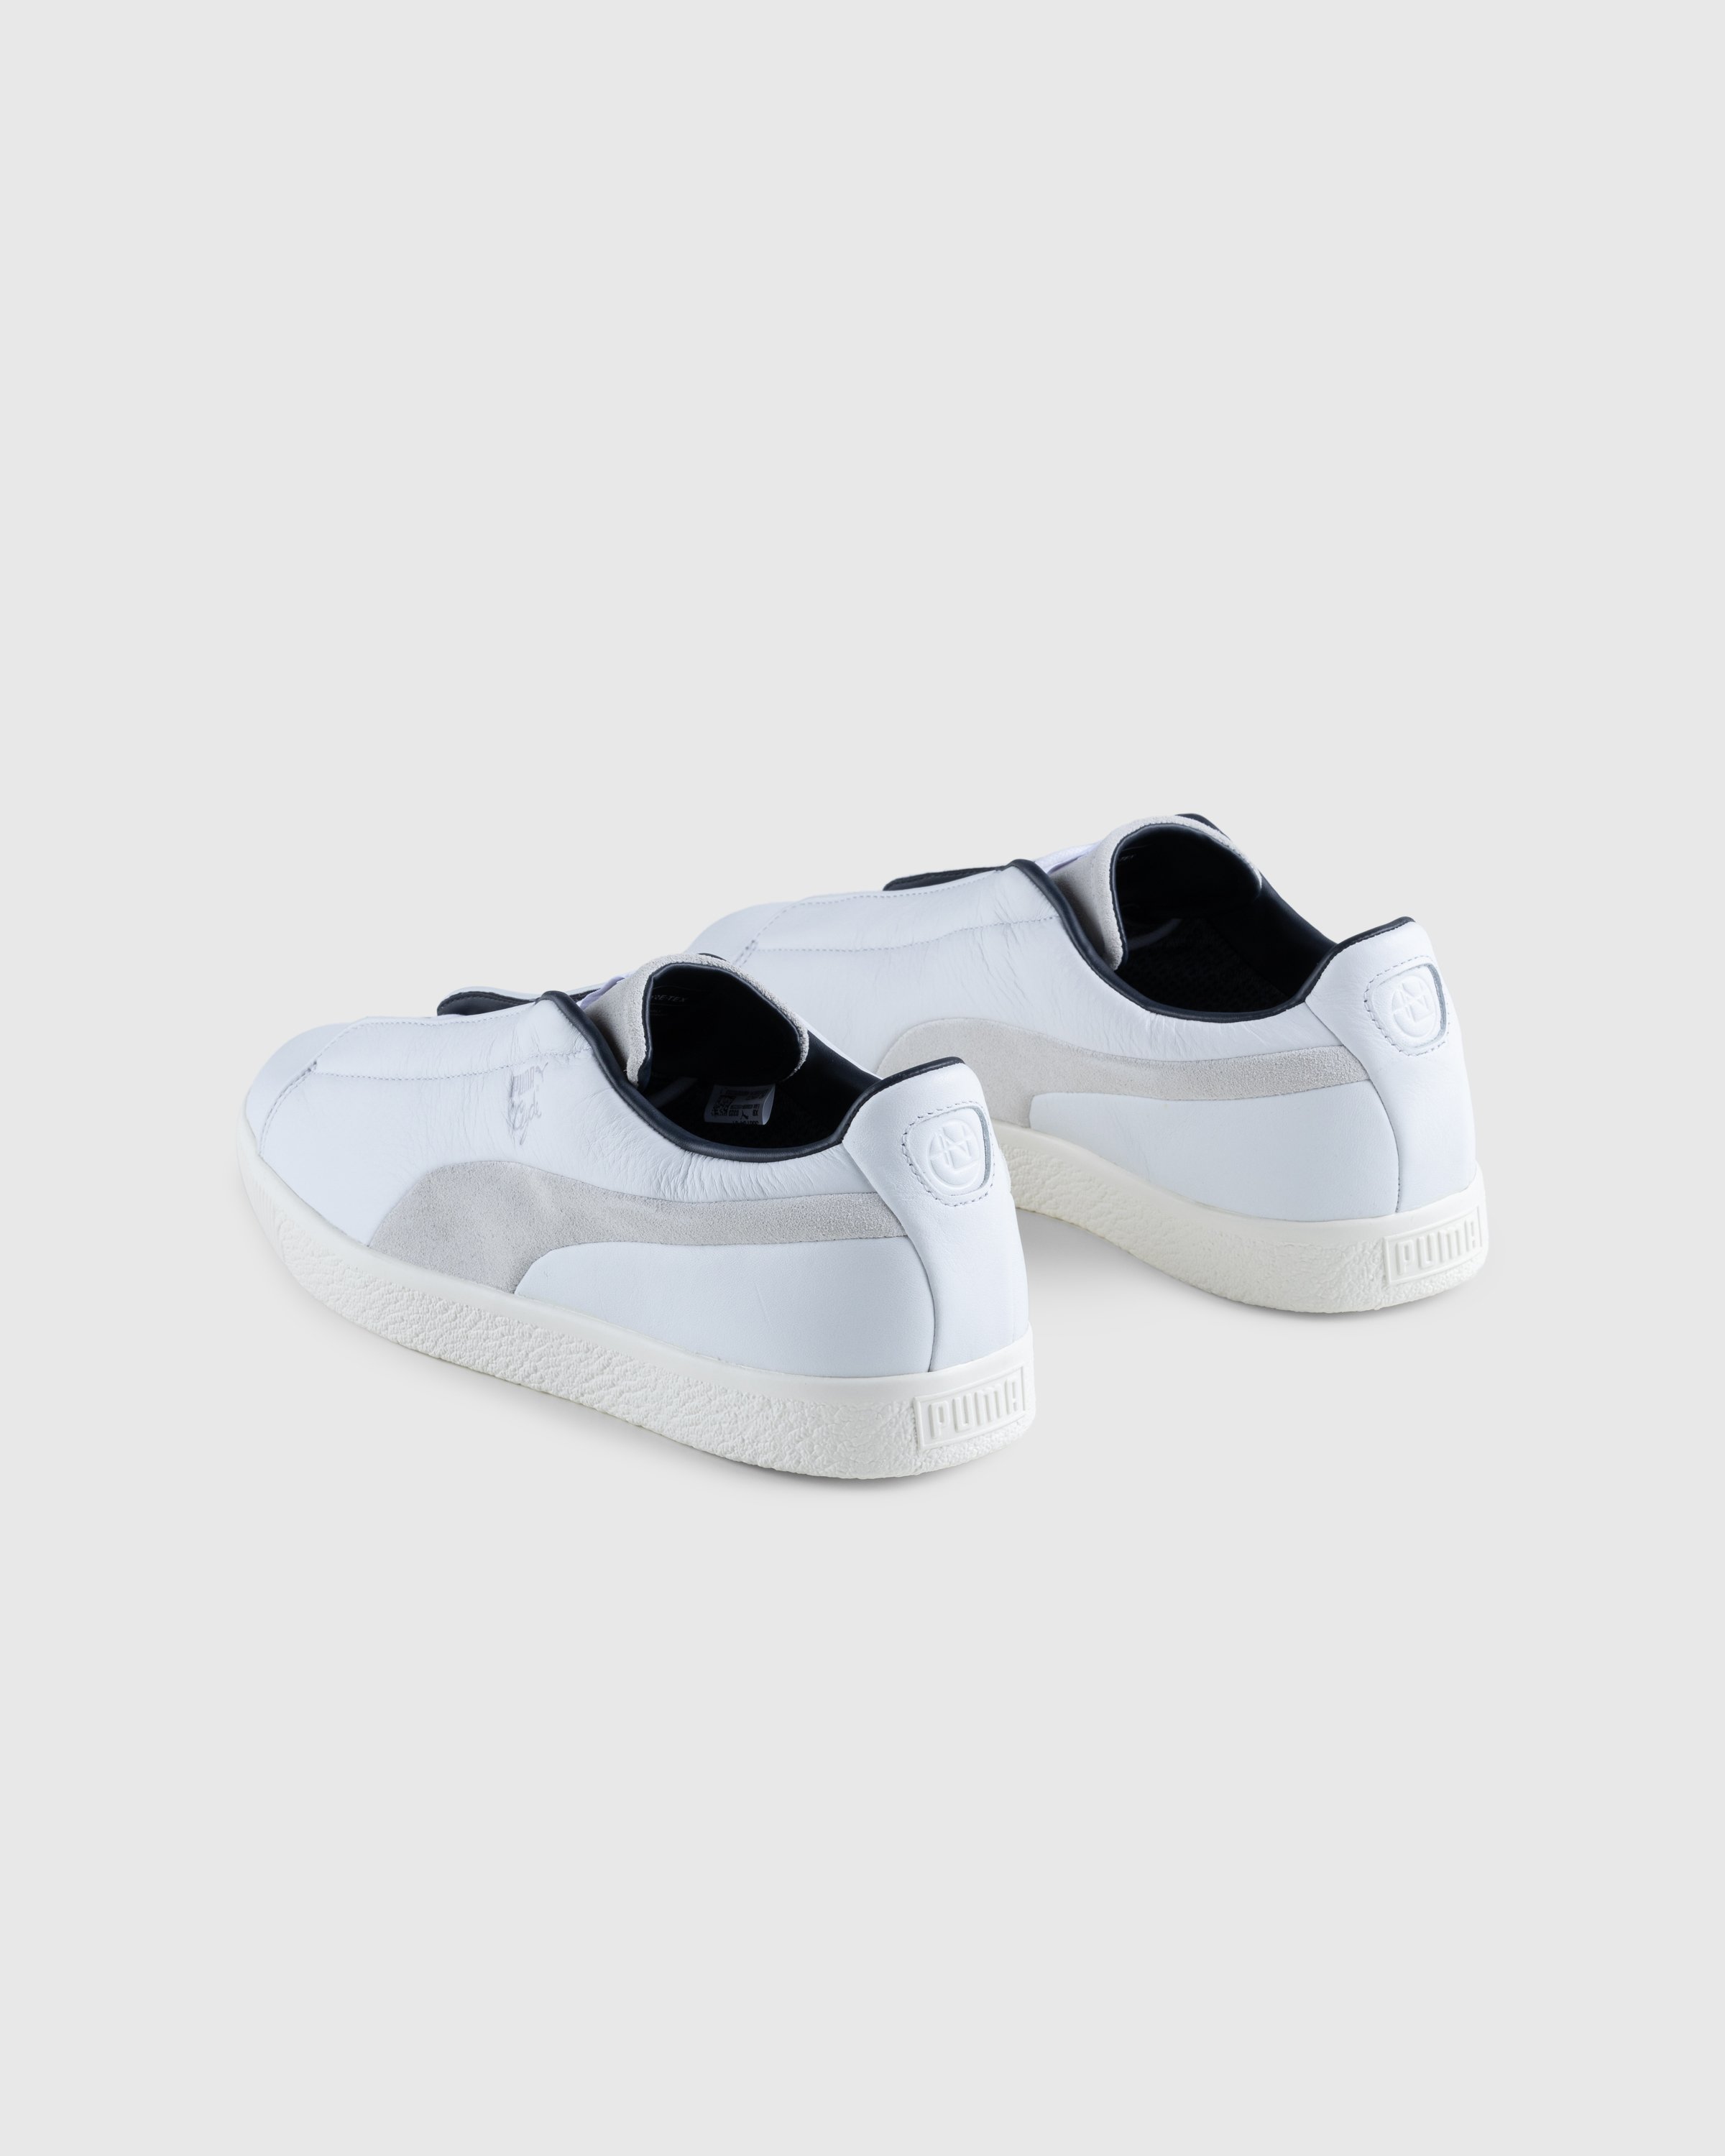 Puma x Nanamica - Clyde GORE-TEX White - Footwear - White - Image 4